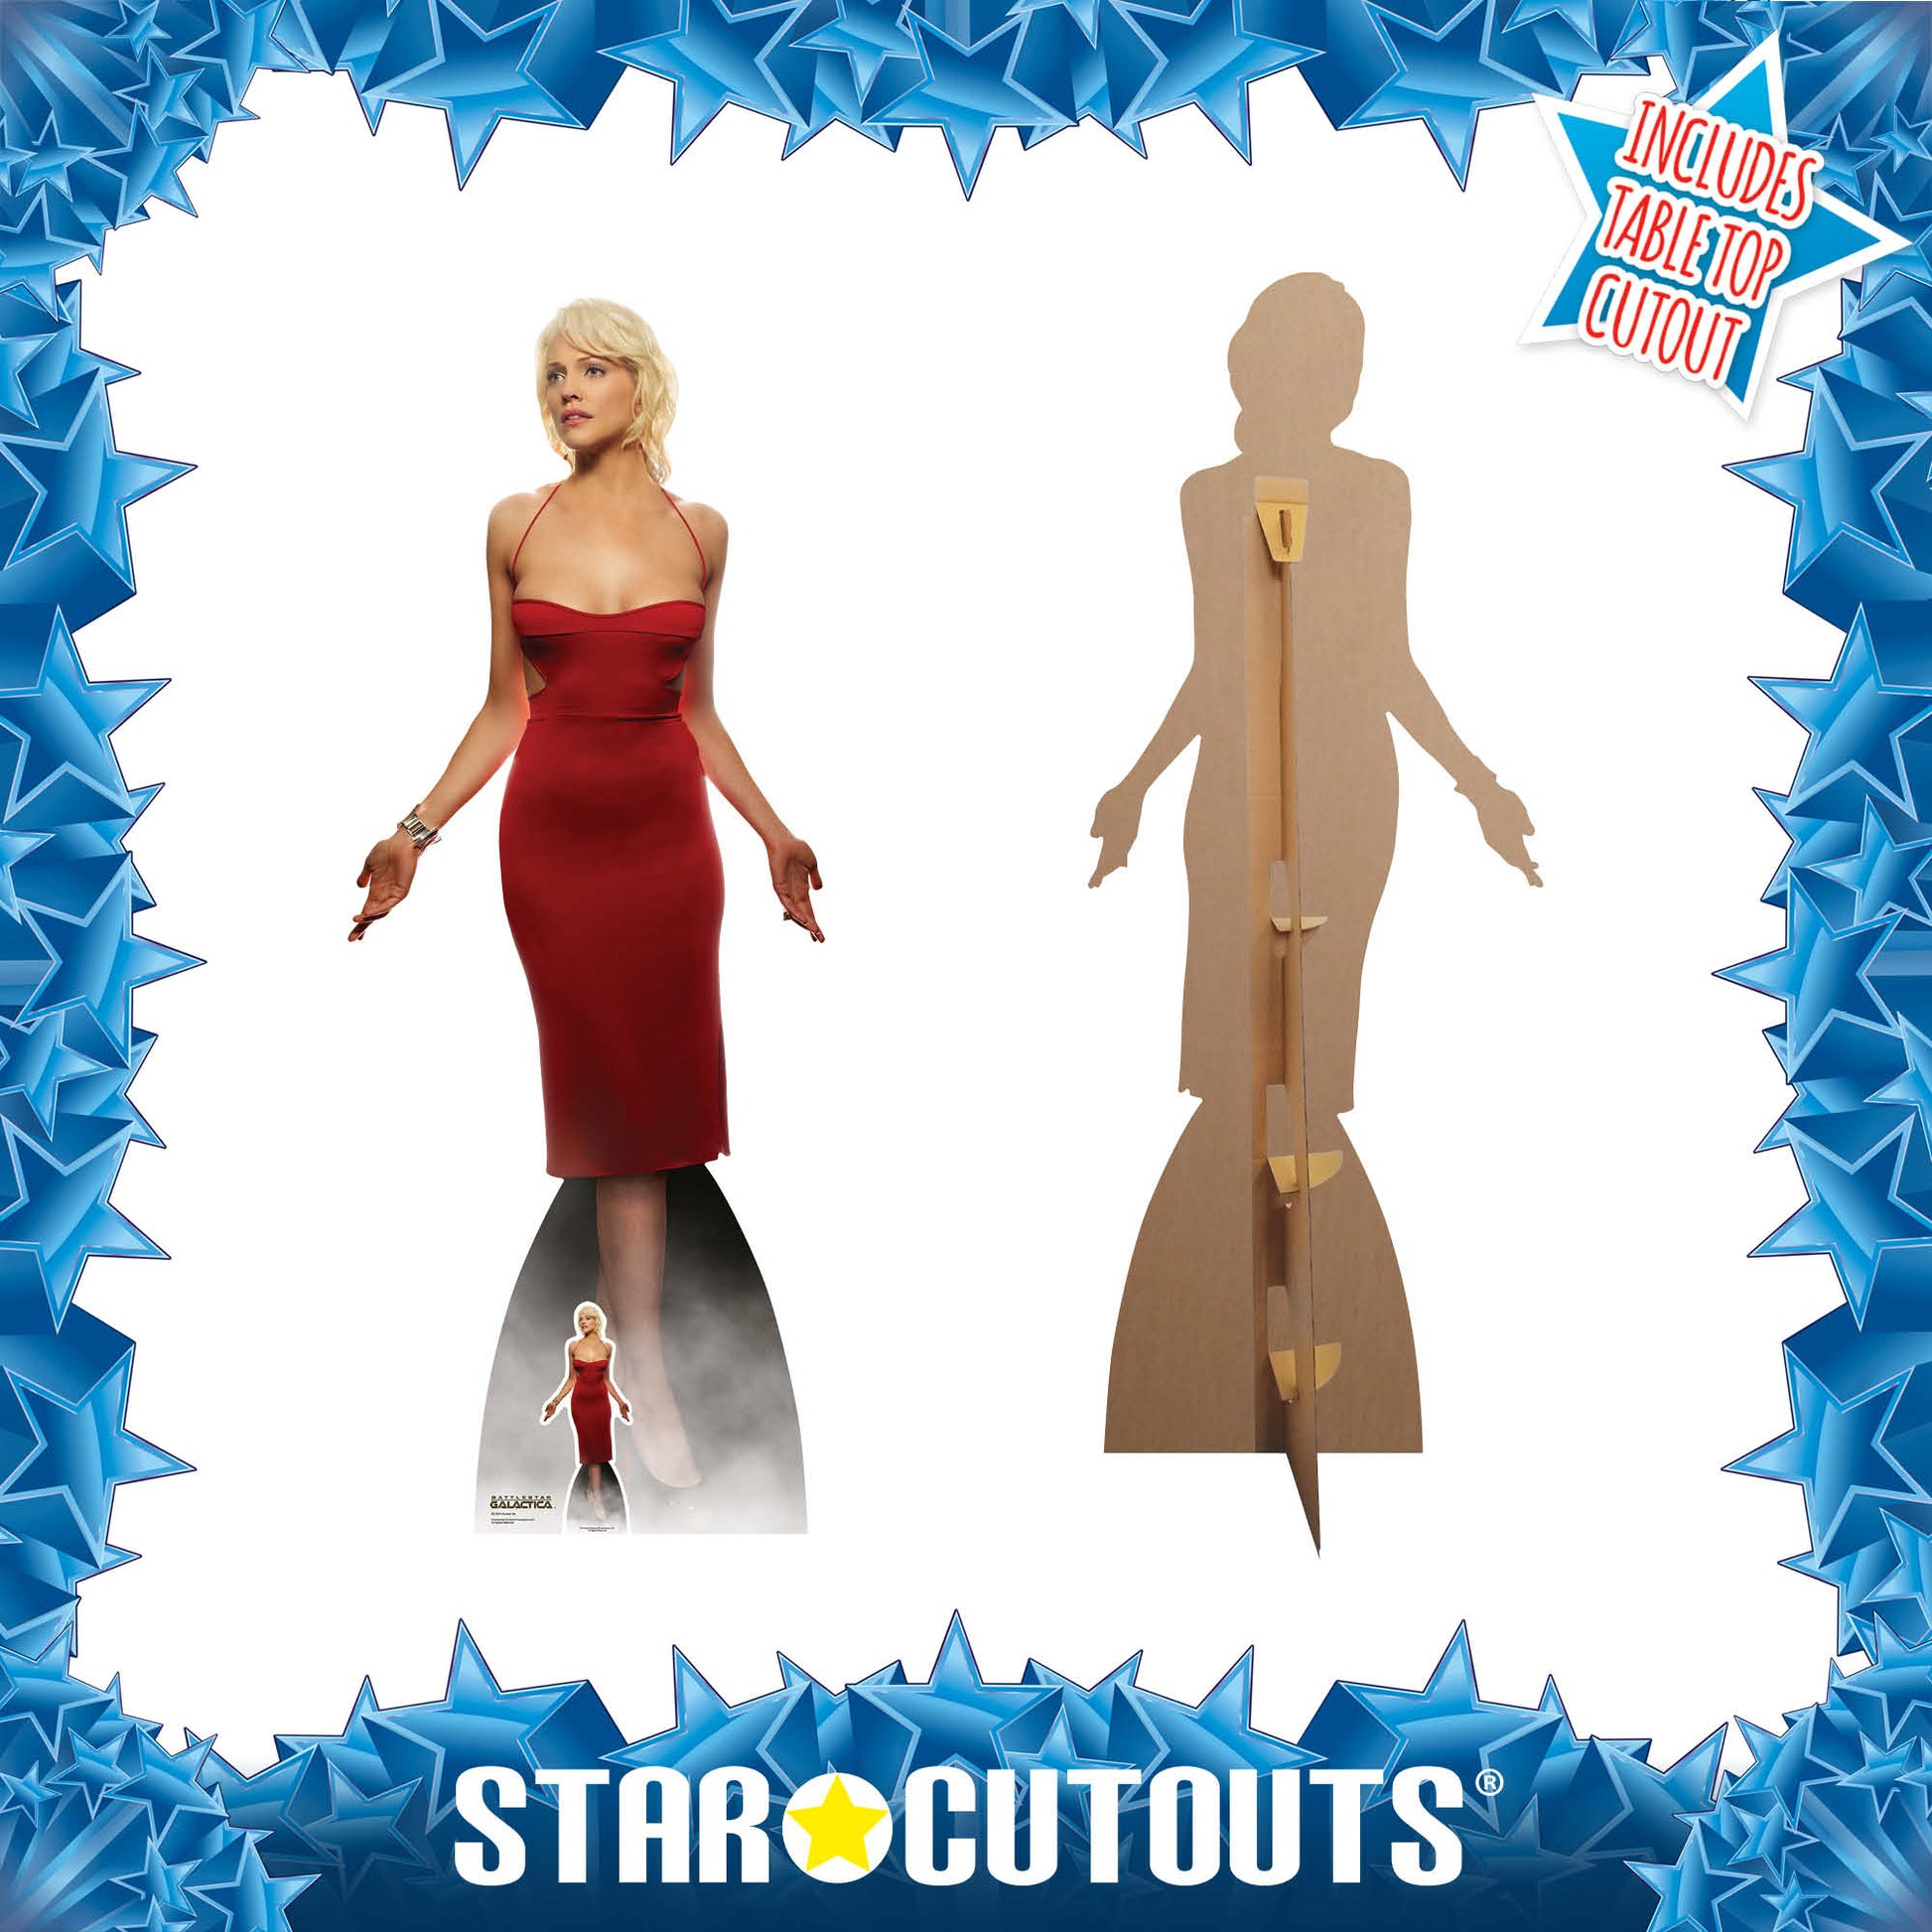 SC1641 Number Six Red Dress Tricia Helfer Battlestar Galactica Cardboard Cut Out Height 180cm - Star Cutouts